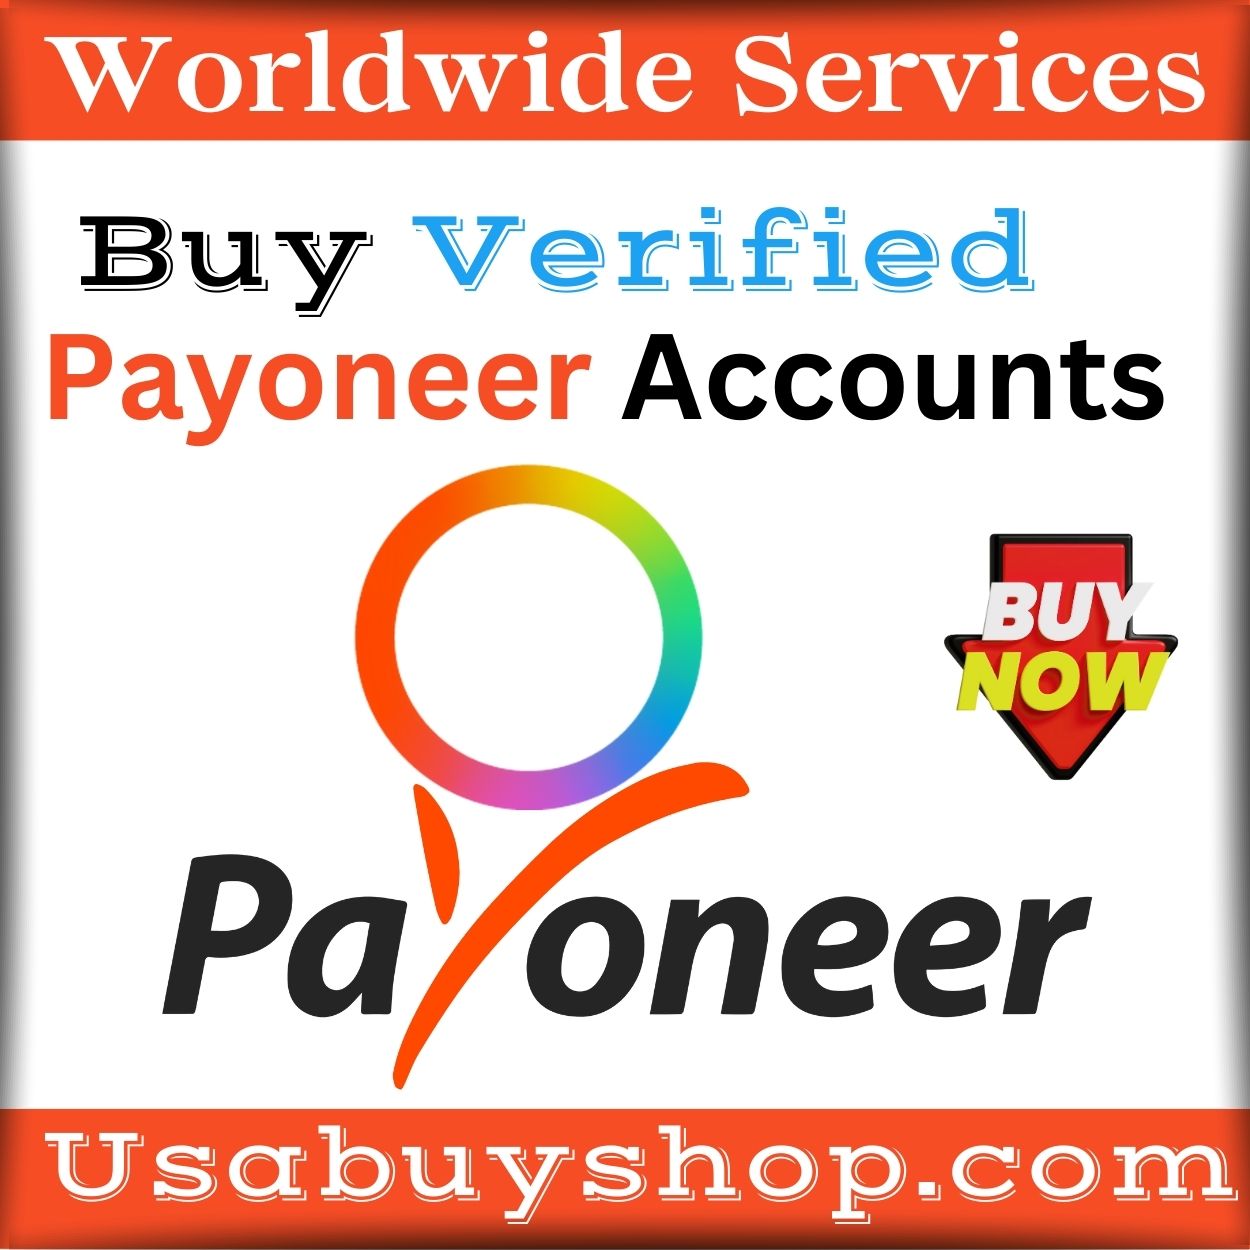 Buy Verified Payoneer Accounts - 100% Verified Old Gmail Account